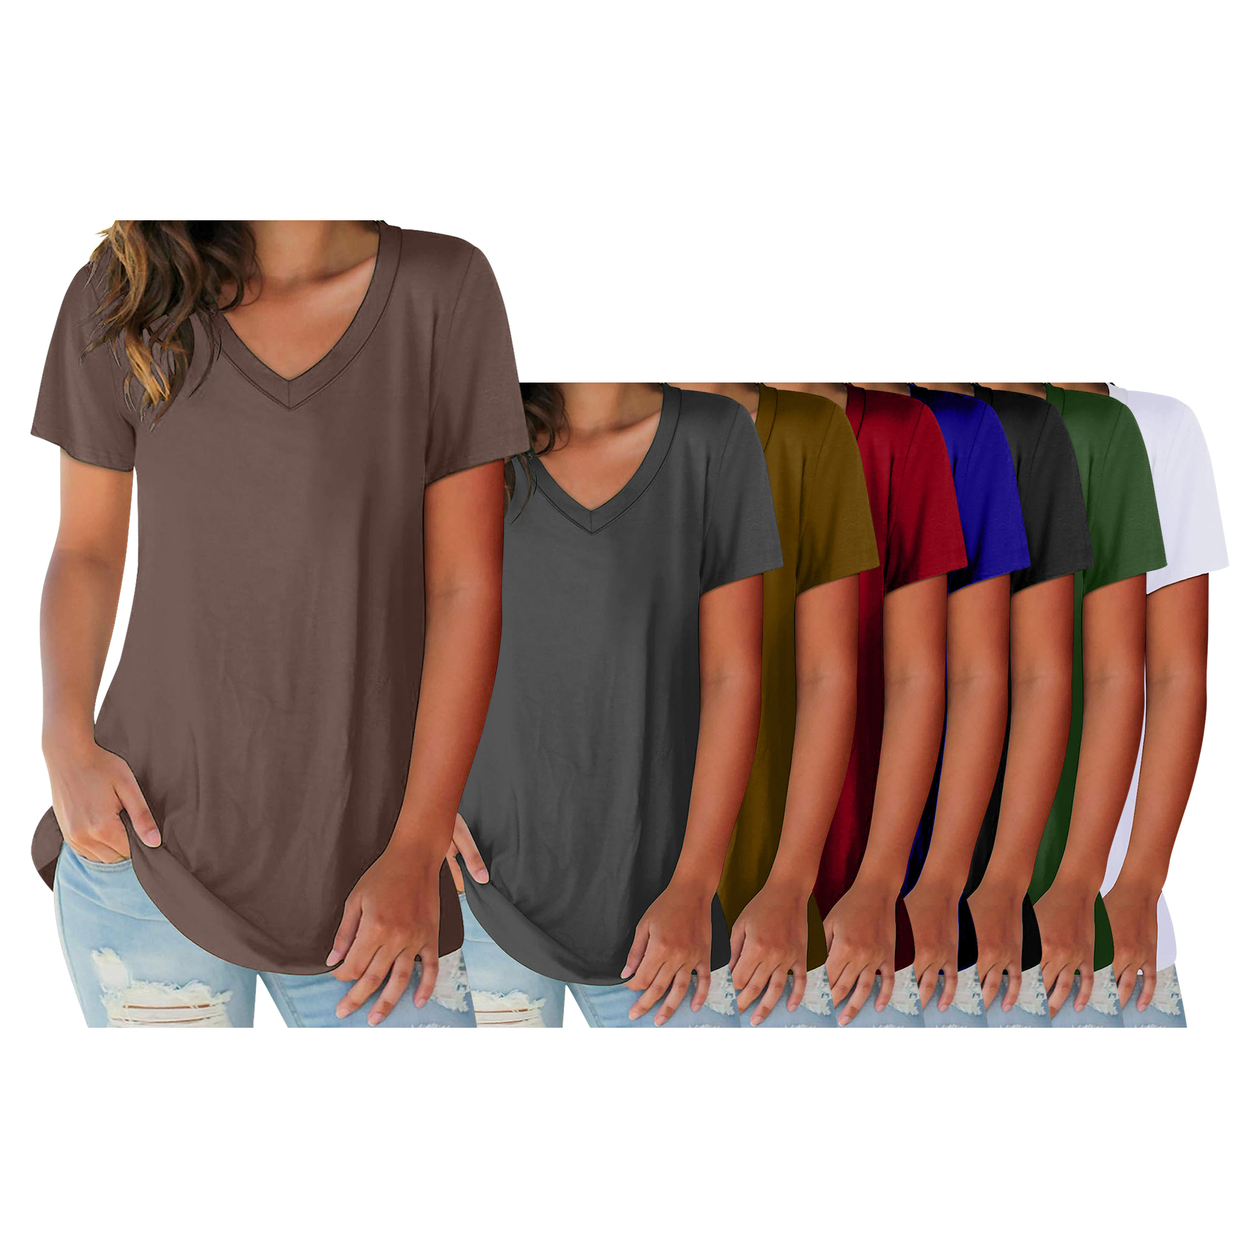 3-Pack: Women's Ultra Soft Smooth Cotton Blend Basic V-Neck Short Sleeve Shirts - Black, Grey Mustard, Small